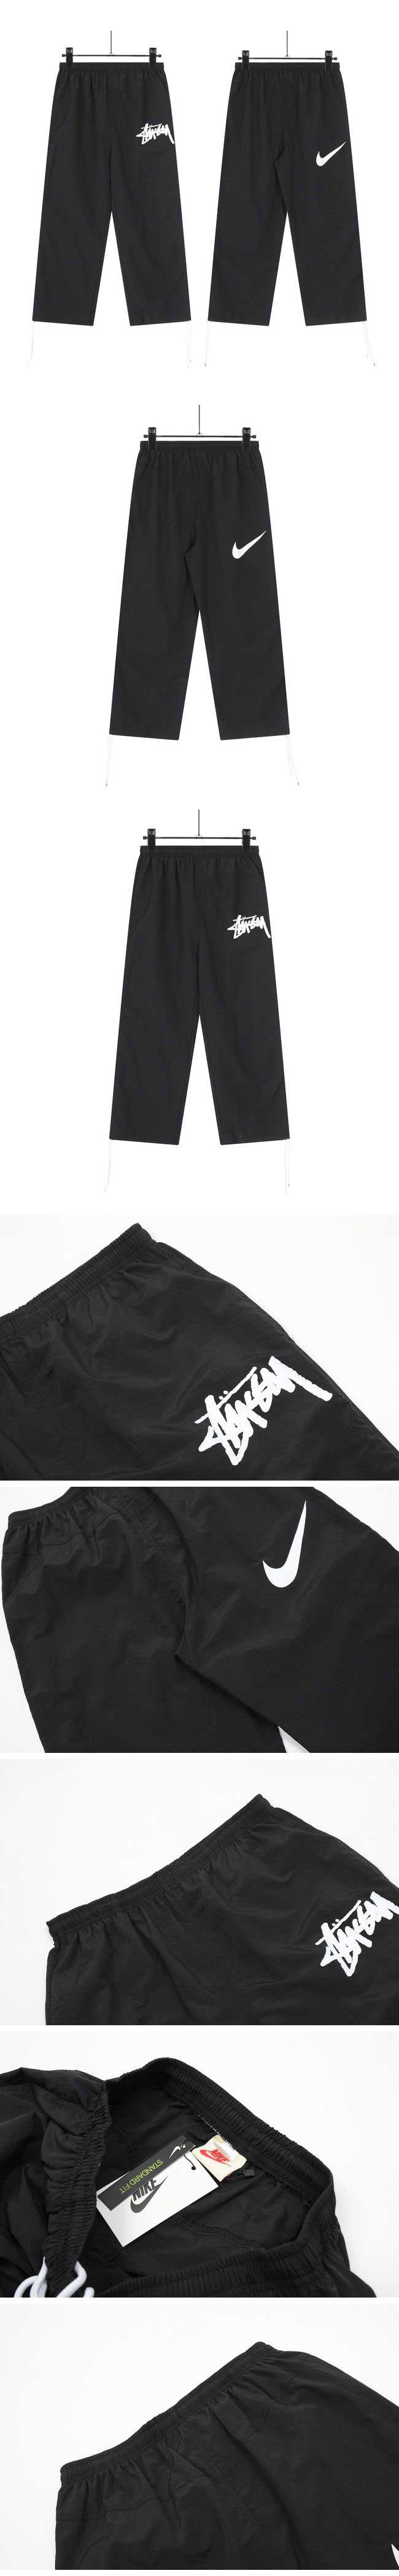 Stussy x Nike Collaboration Pants ステューシー x ナイキ コラボレーション パンツ